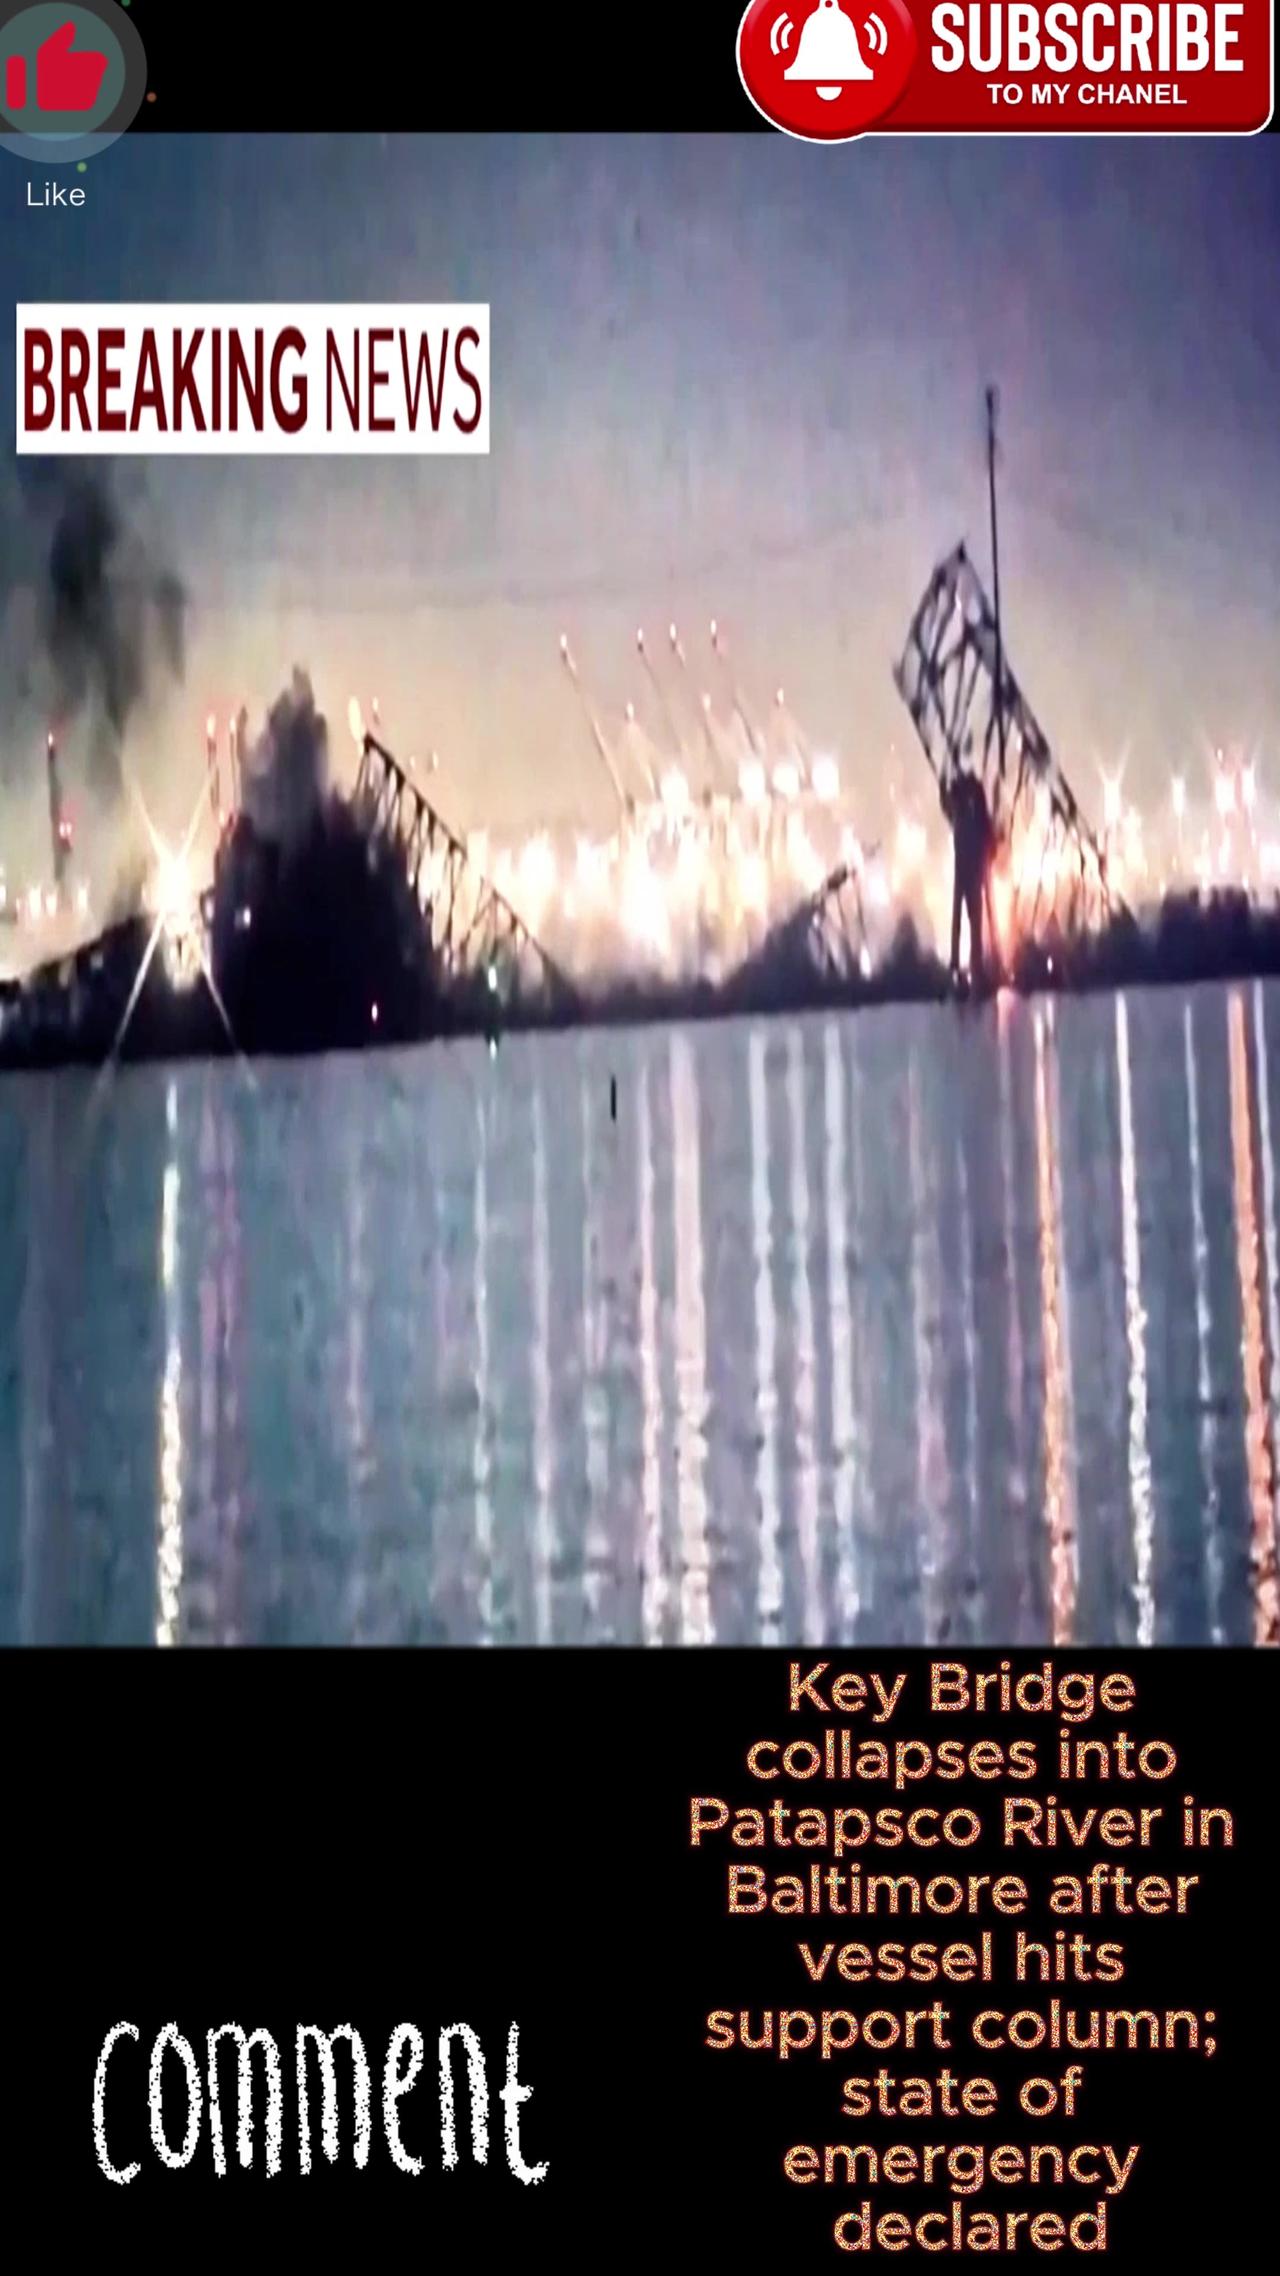 Key Bridge collapses into Patapsco River in Baltimore